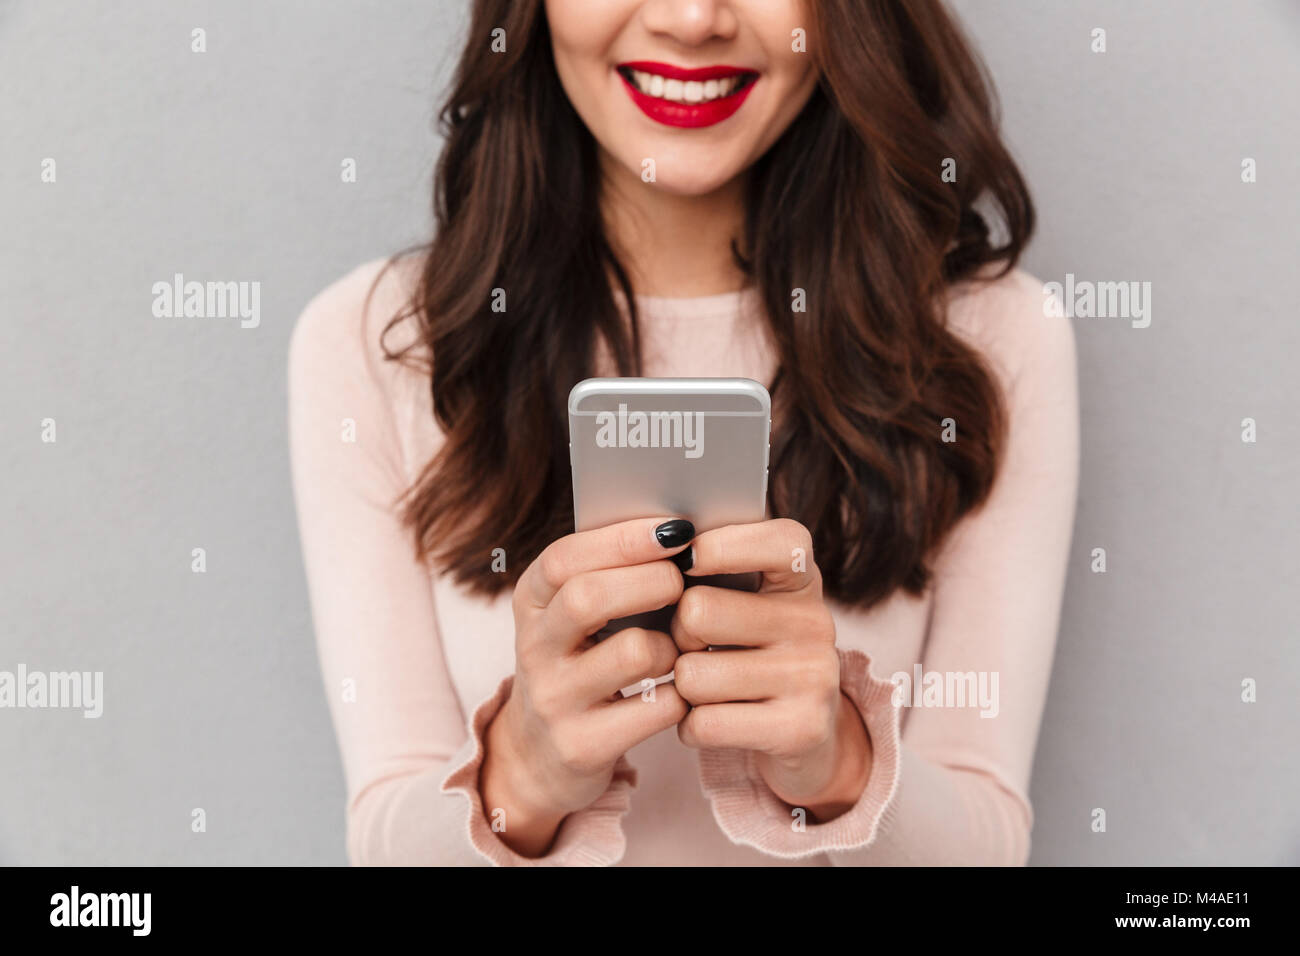 Close up image of smiling female with red lips holding mobile phone chatter ou jouer à des jeux via appareil moderne, sur fond gris, cropped Banque D'Images